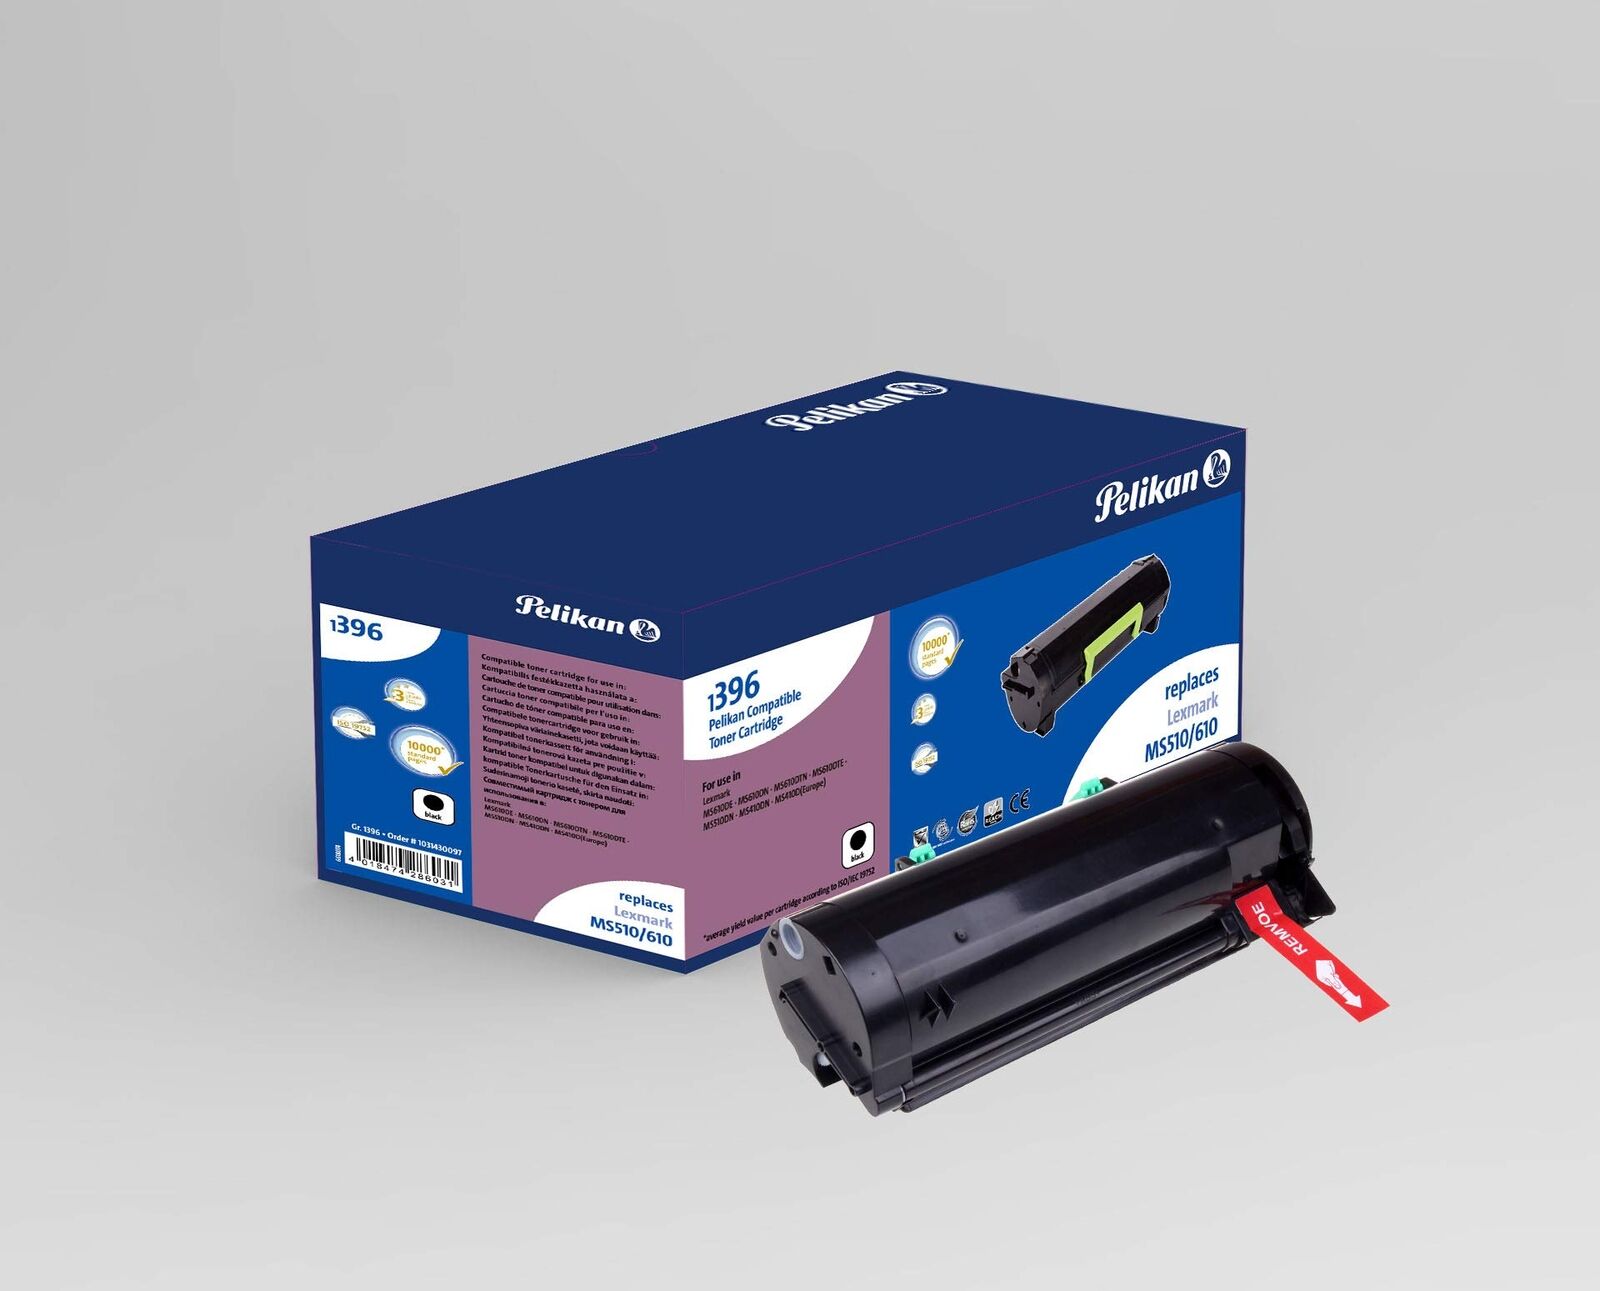 Pelikan Toner Cartridge Replacement for Lexmark 502X Black Extra High Yield